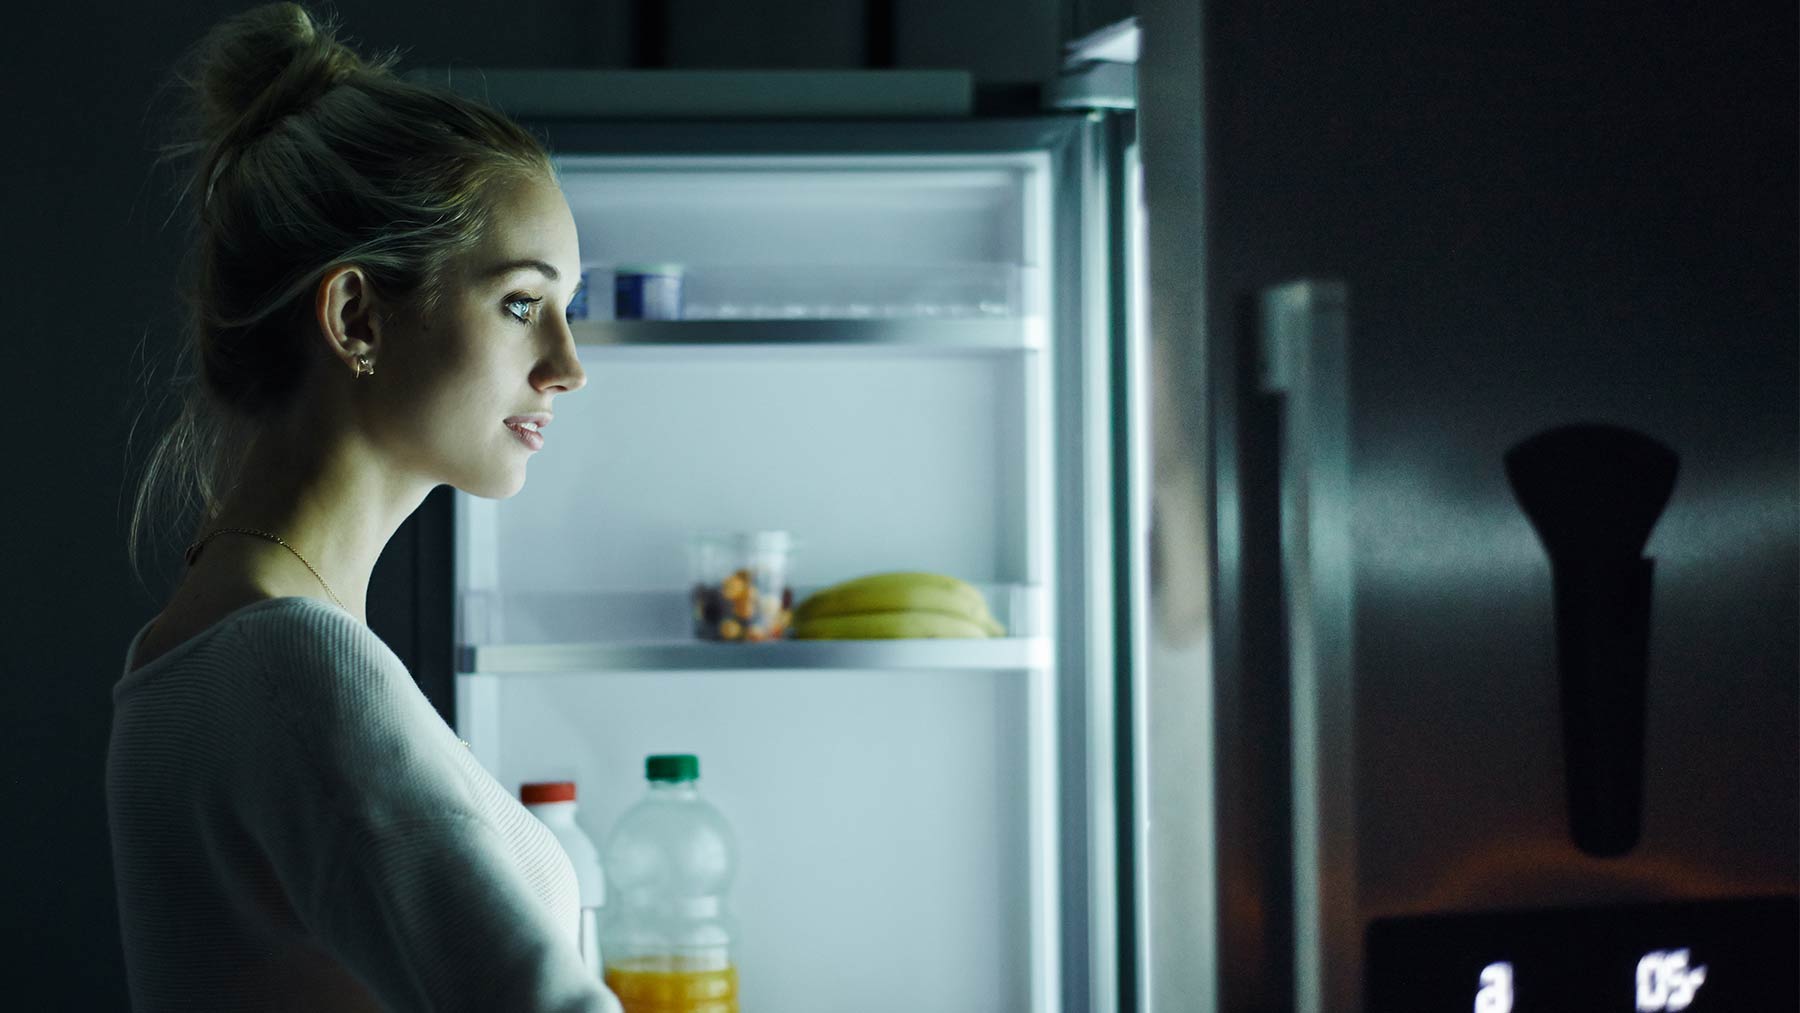 woman looking into refrigerator in the dark